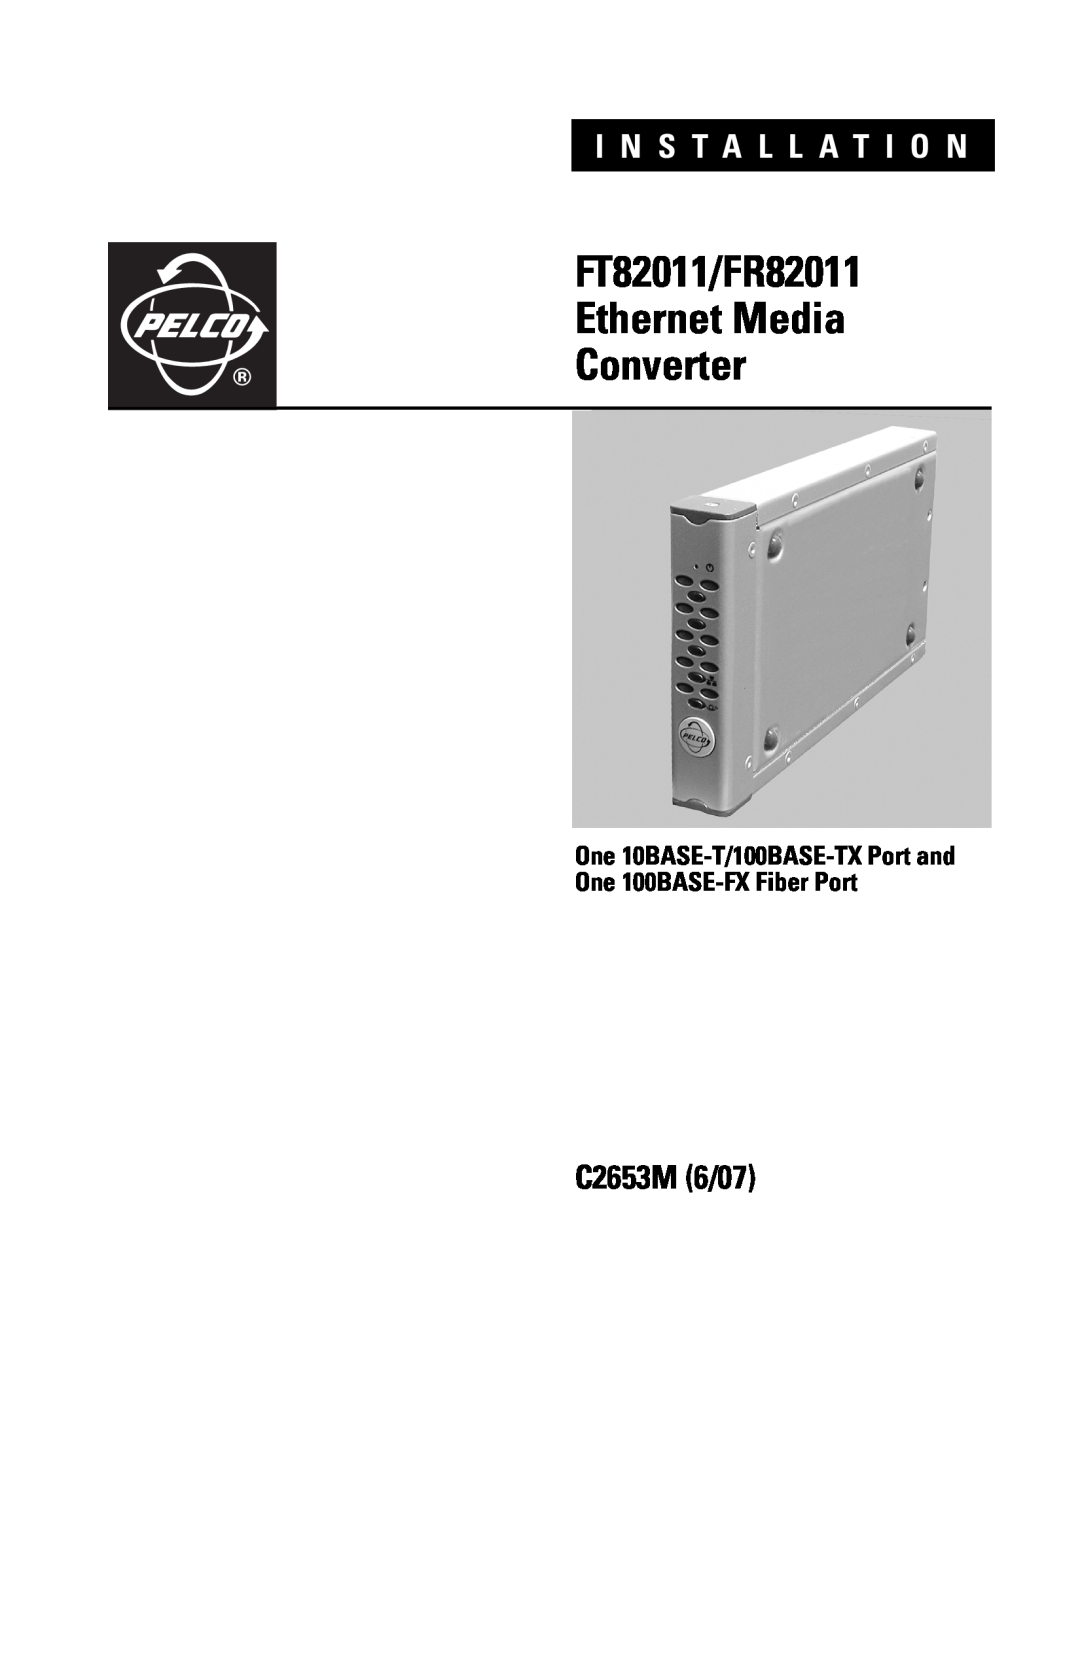 Pelco manual FT82011/FR82011, Ethernet Media, Converter, C2653M 6/07, I N S T A L L A T I O N 